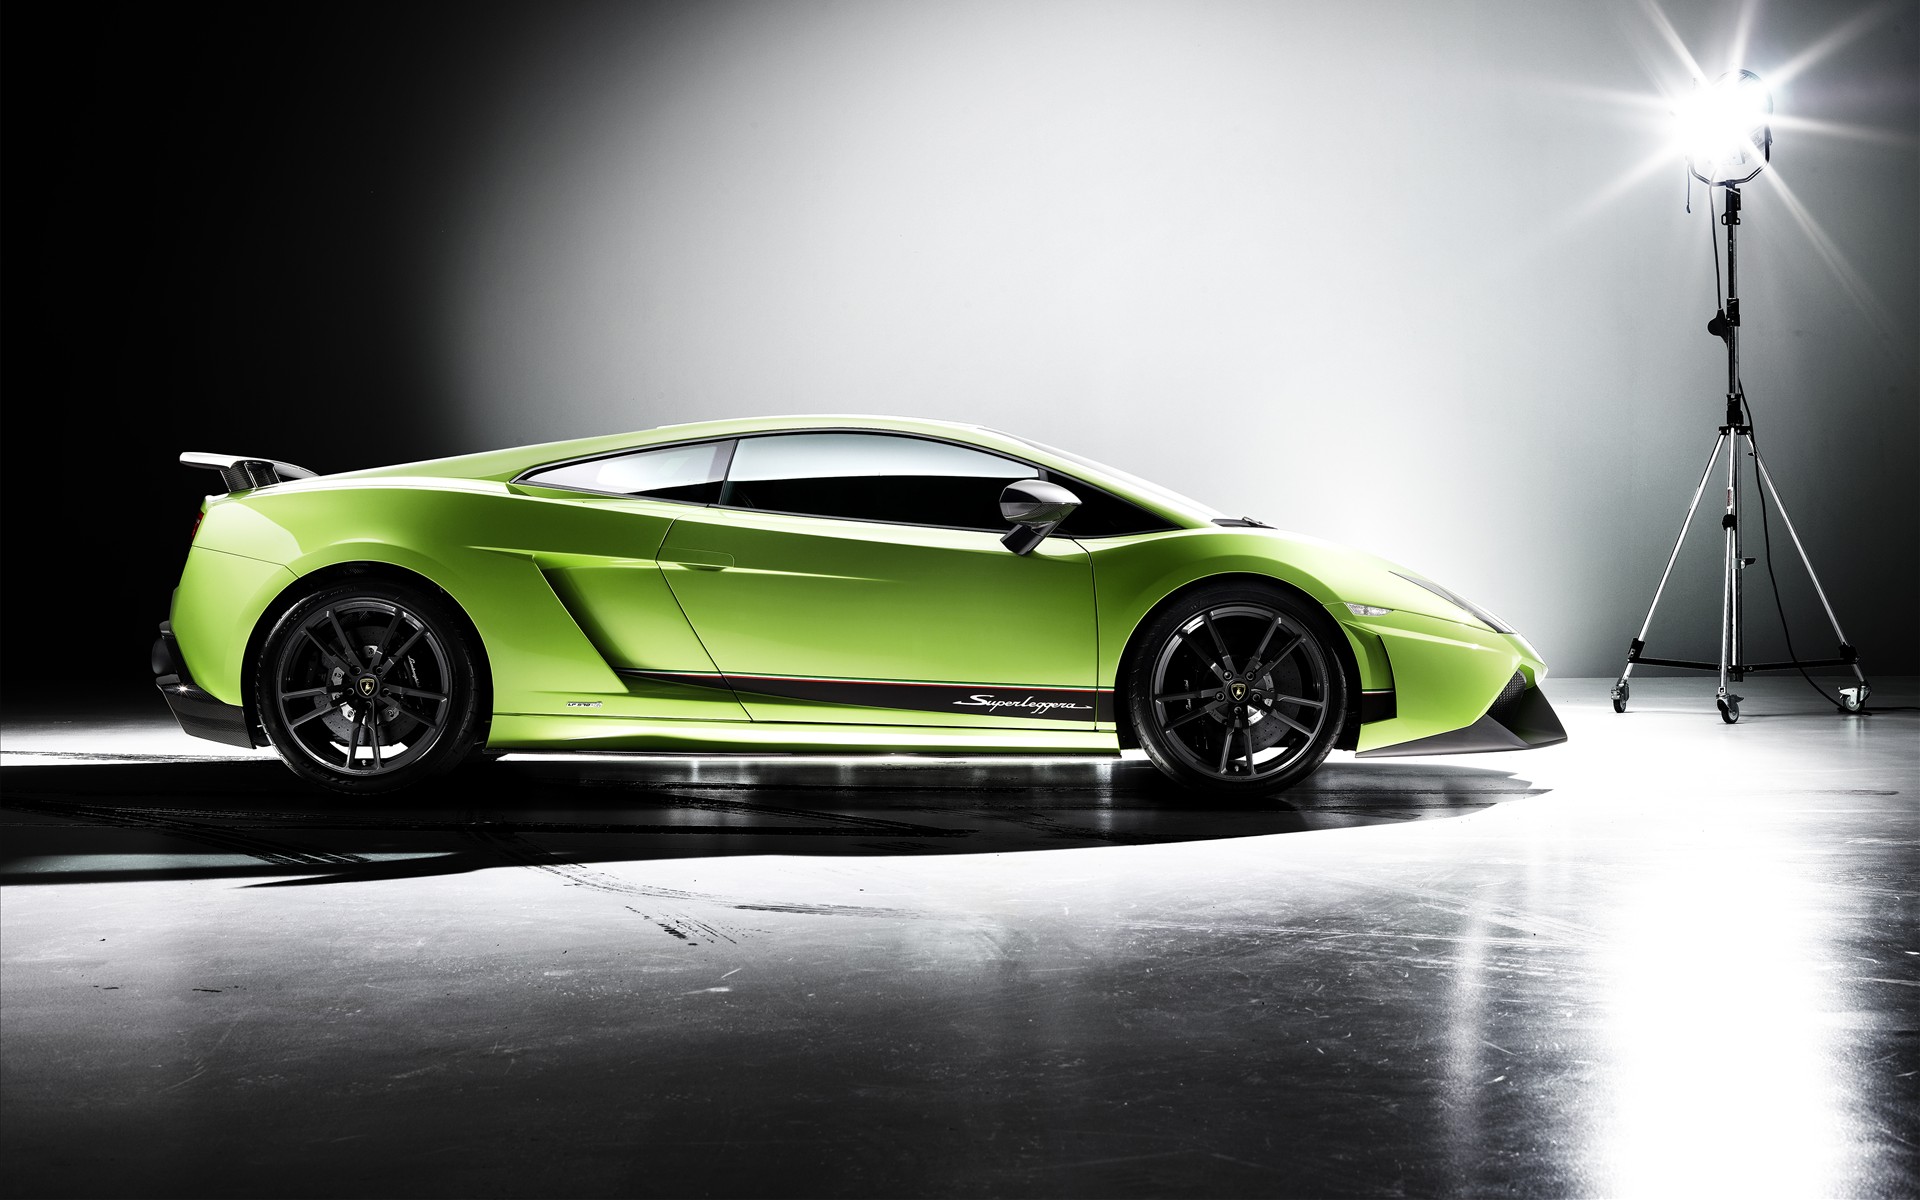 Free download Download Lamborghini Wallpapers In HD For Desktop And